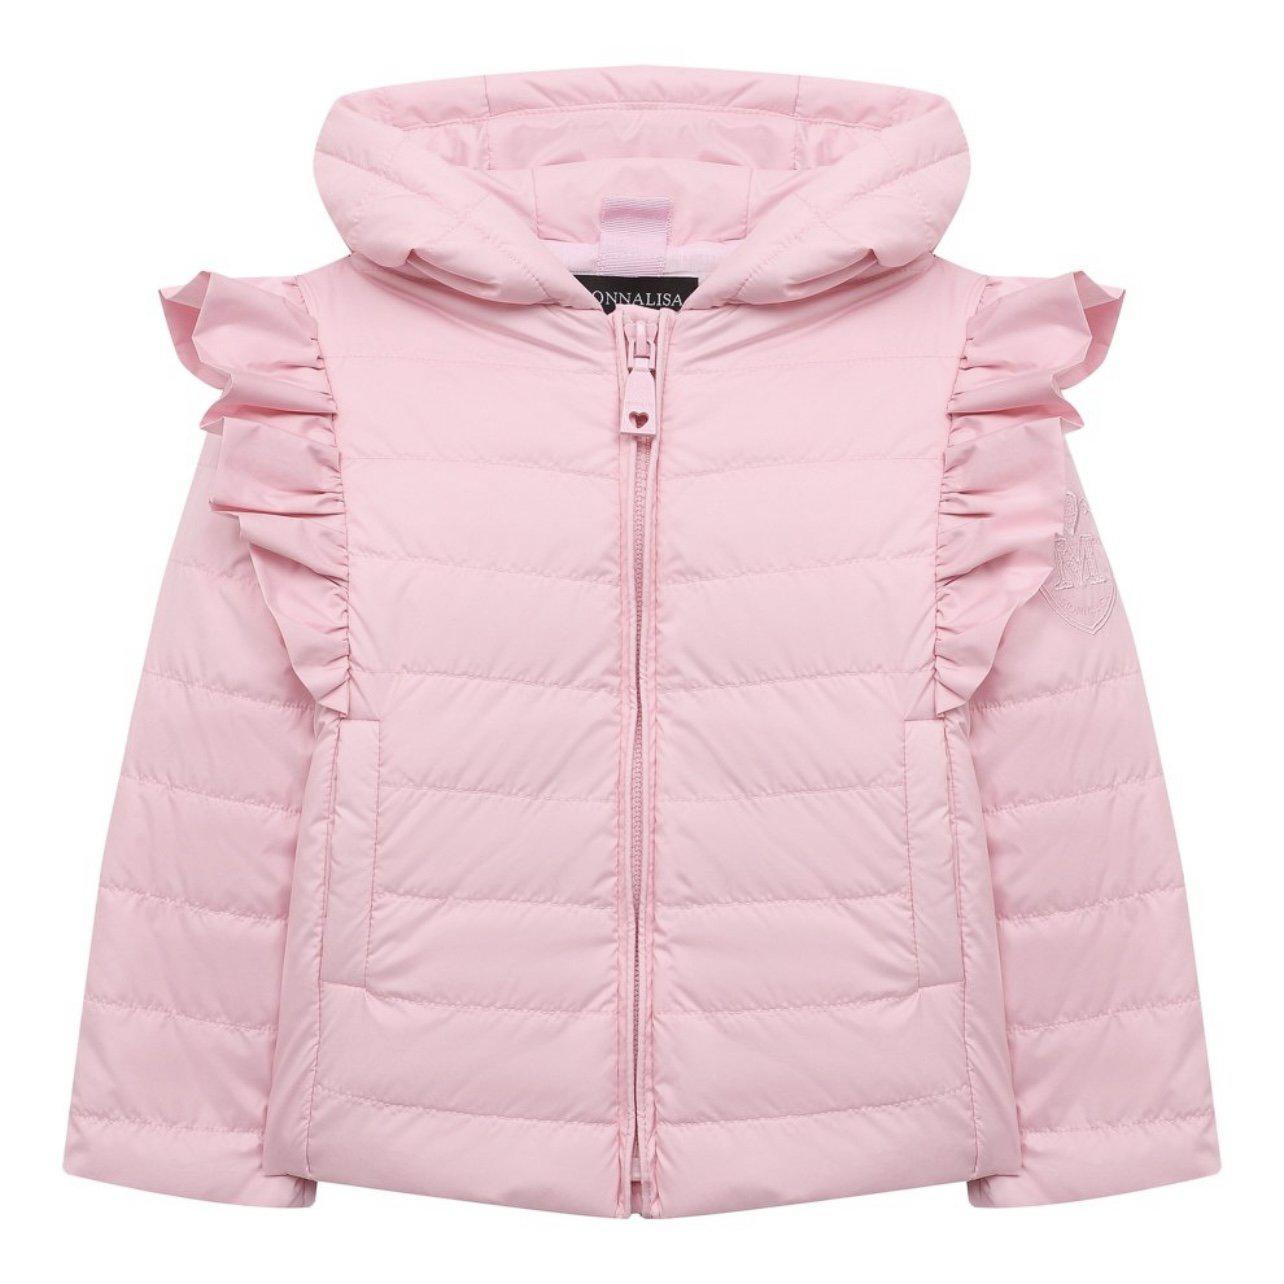 Monnalisa Baby Girls Pink Frill Jacket